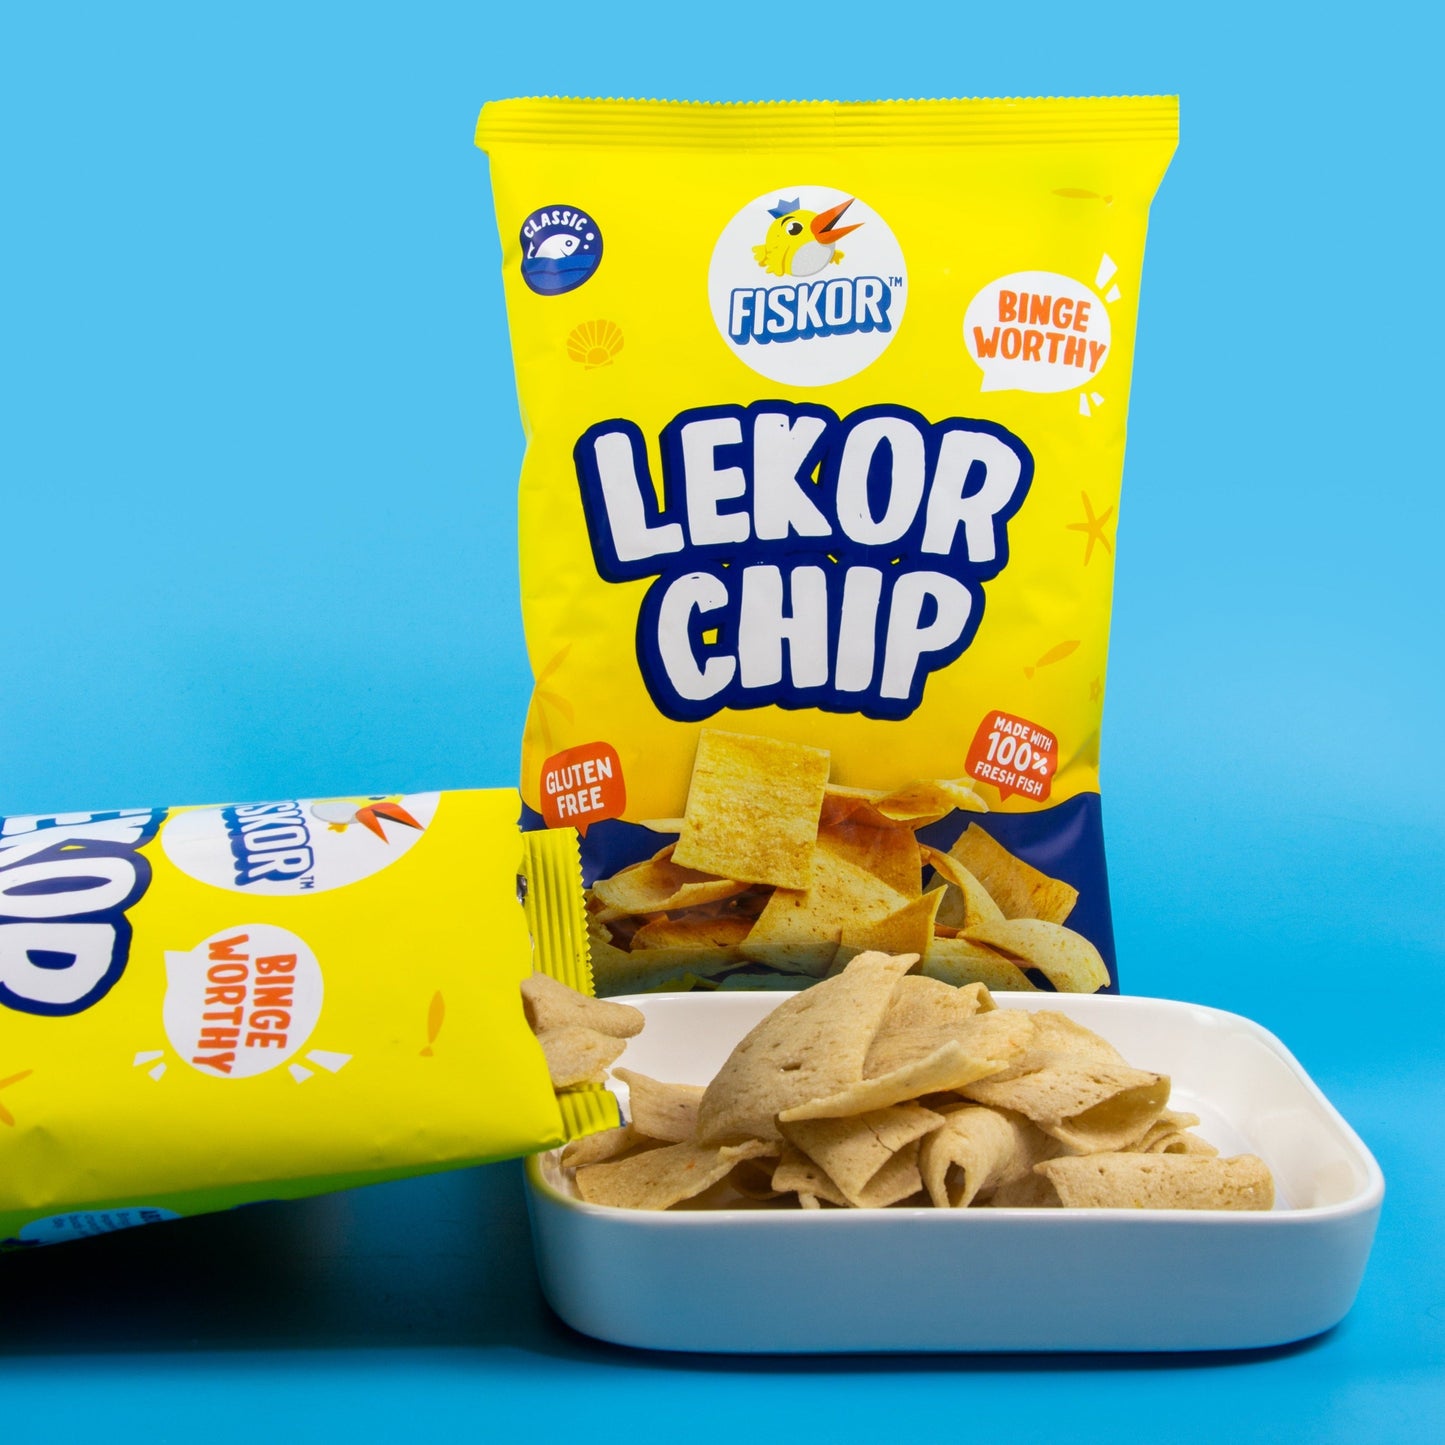 Fiskor™ Best Combo - 2 x Lekor Chips + Chilli Sauce